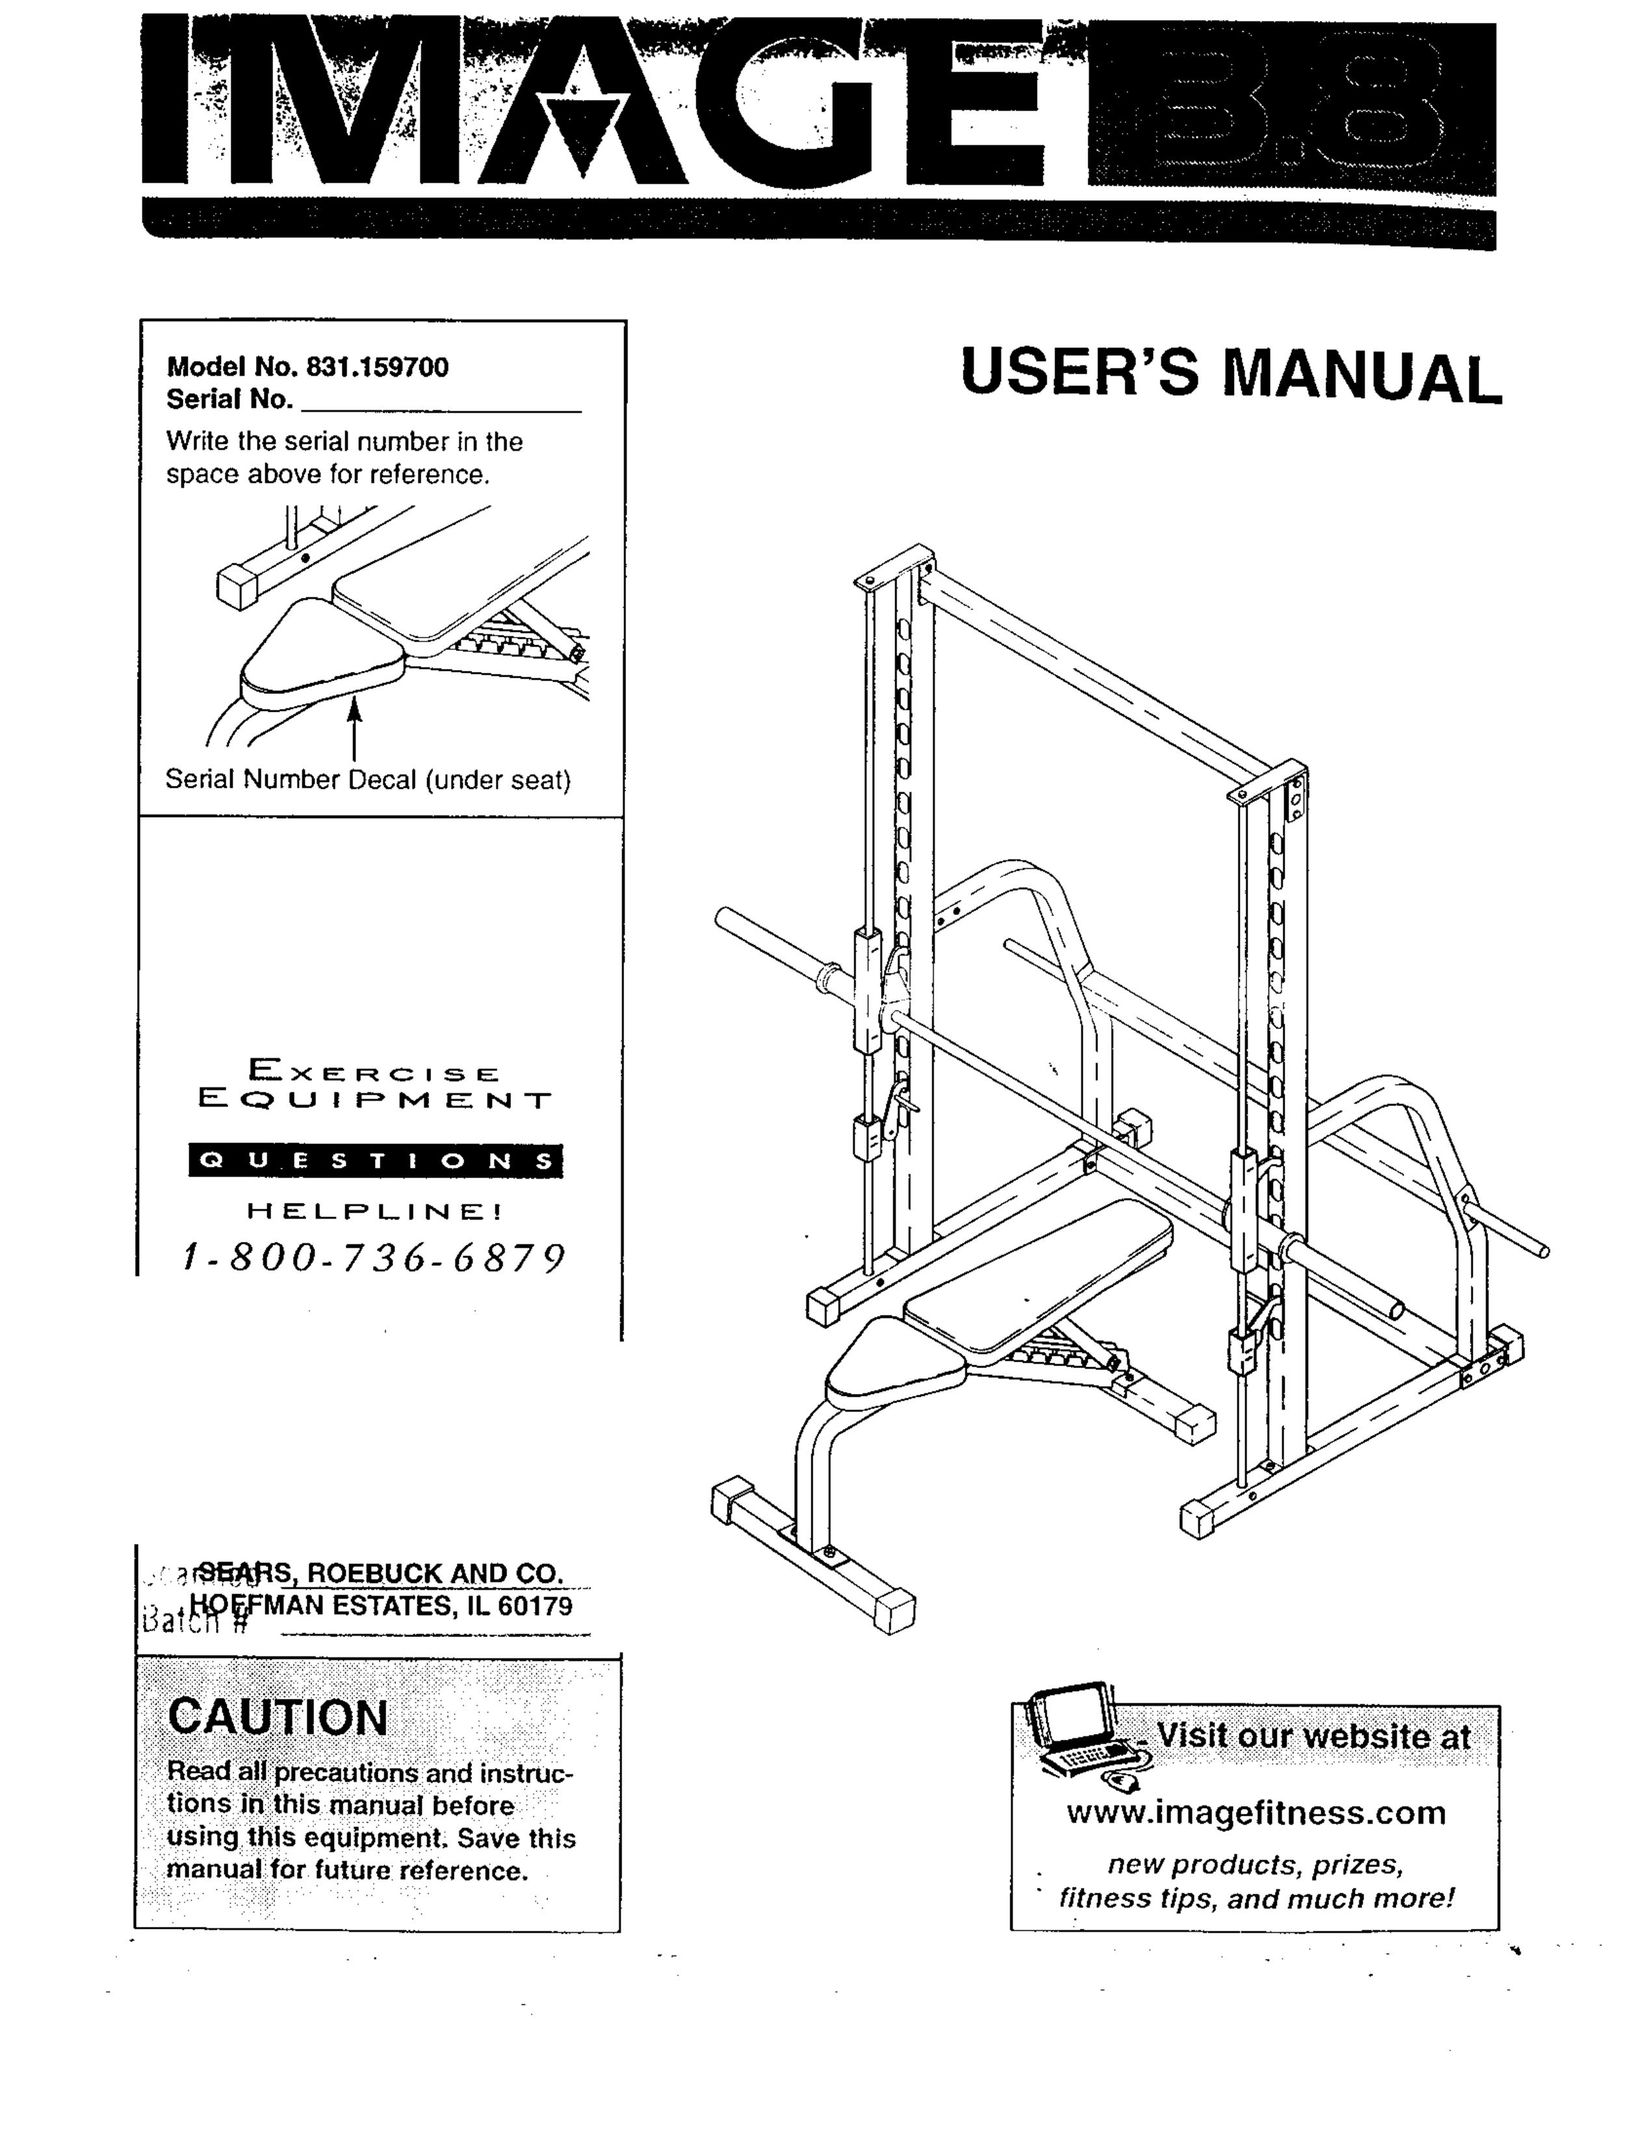 Image 831.1597 Fitness Equipment User Manual